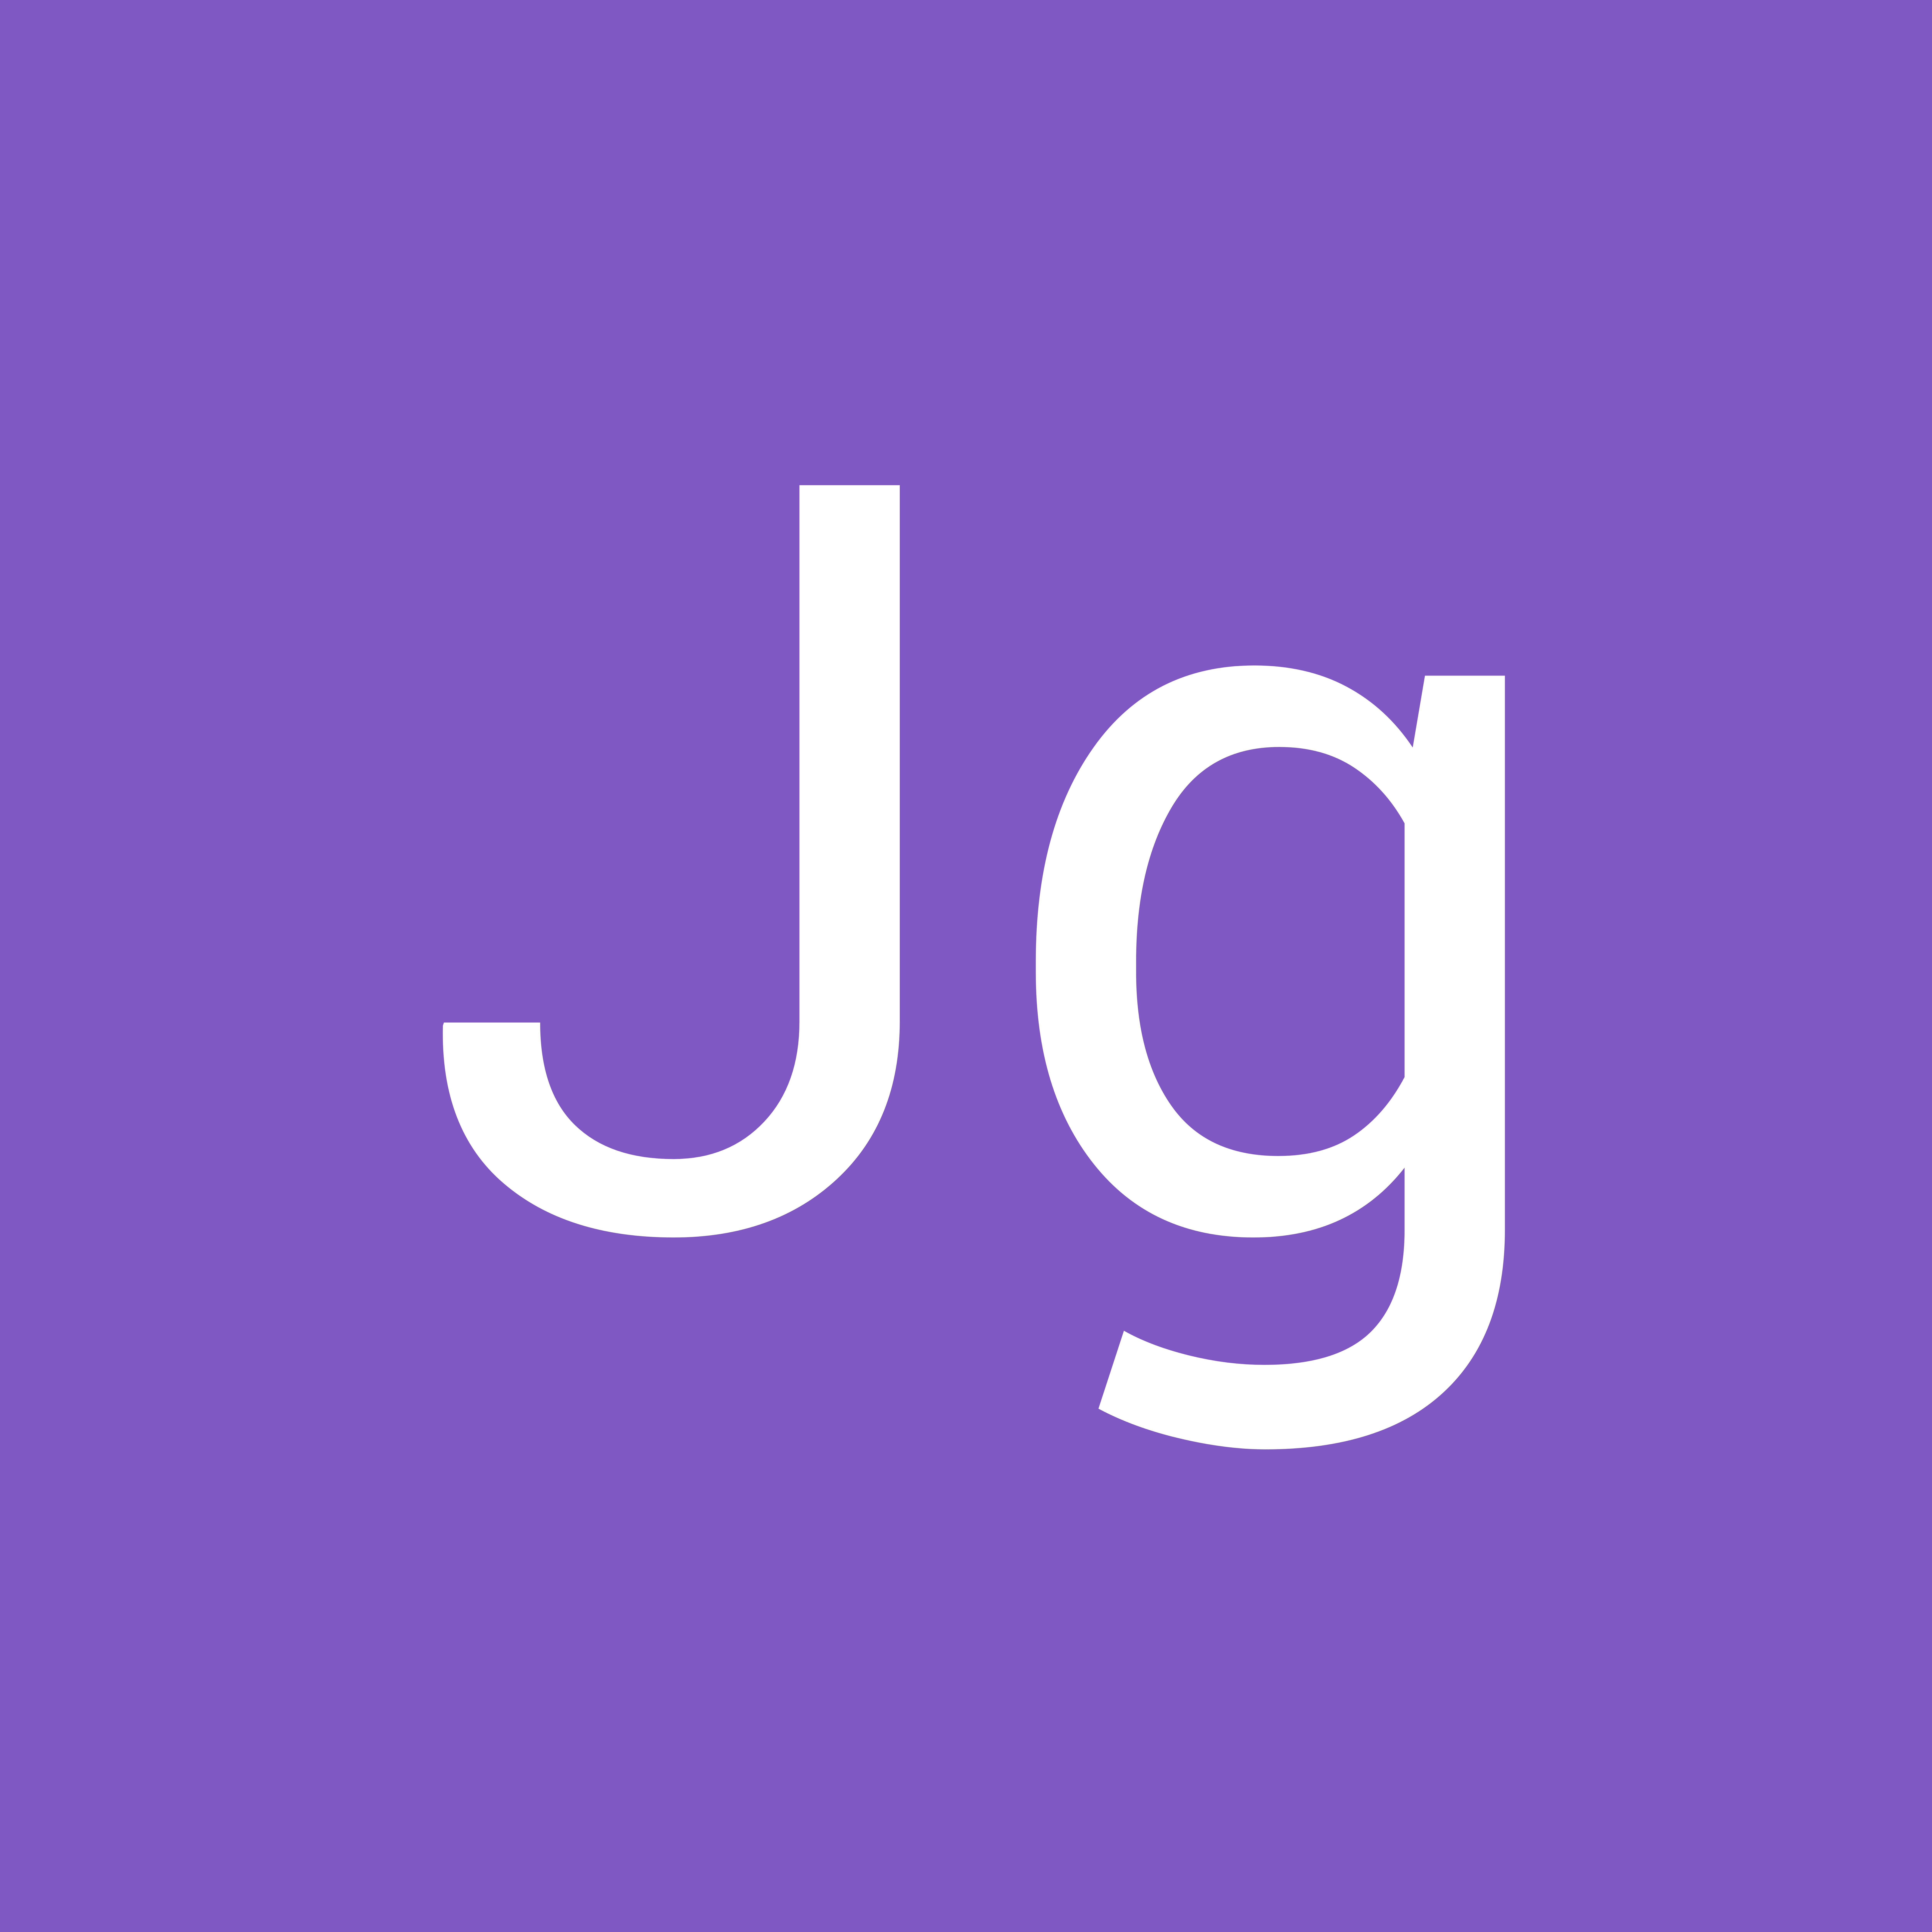 Jg Jb